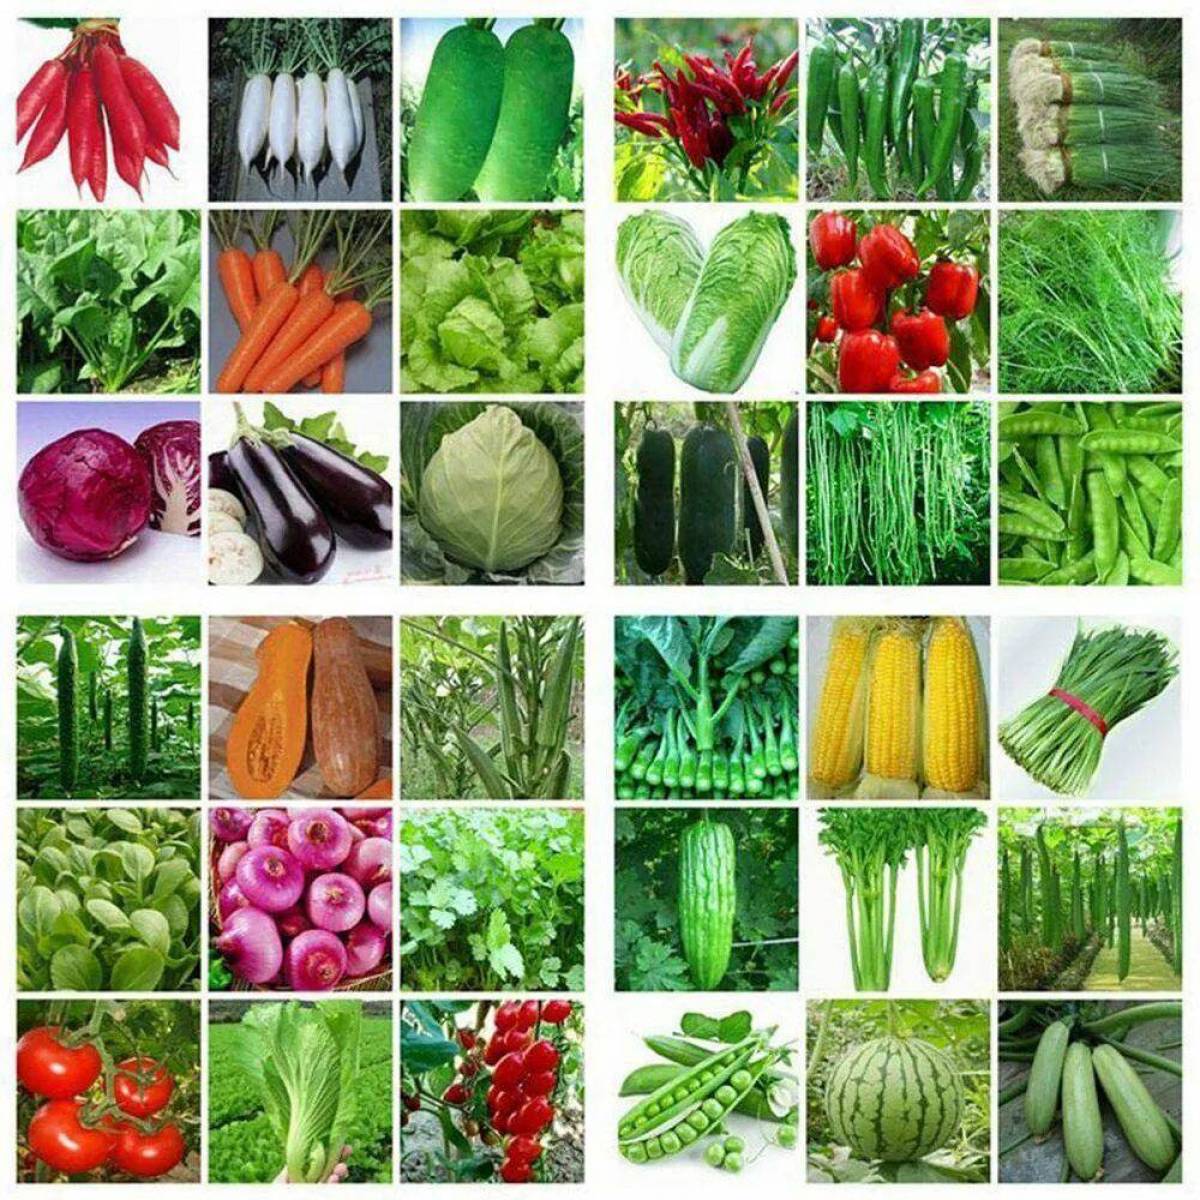 Vegetable seed. Семена овощей. Овощные растения. Семена овощей и зелени для огорода. Овощные культурные растения.